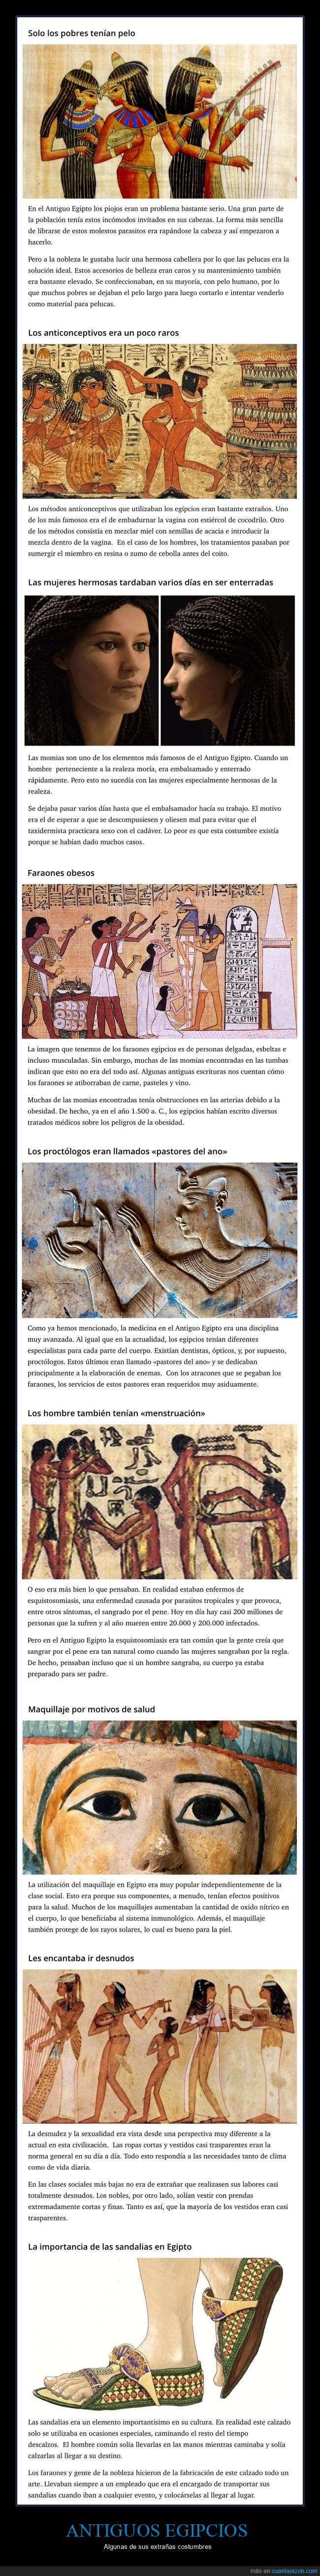 egipcios,costumbres,curiosidades